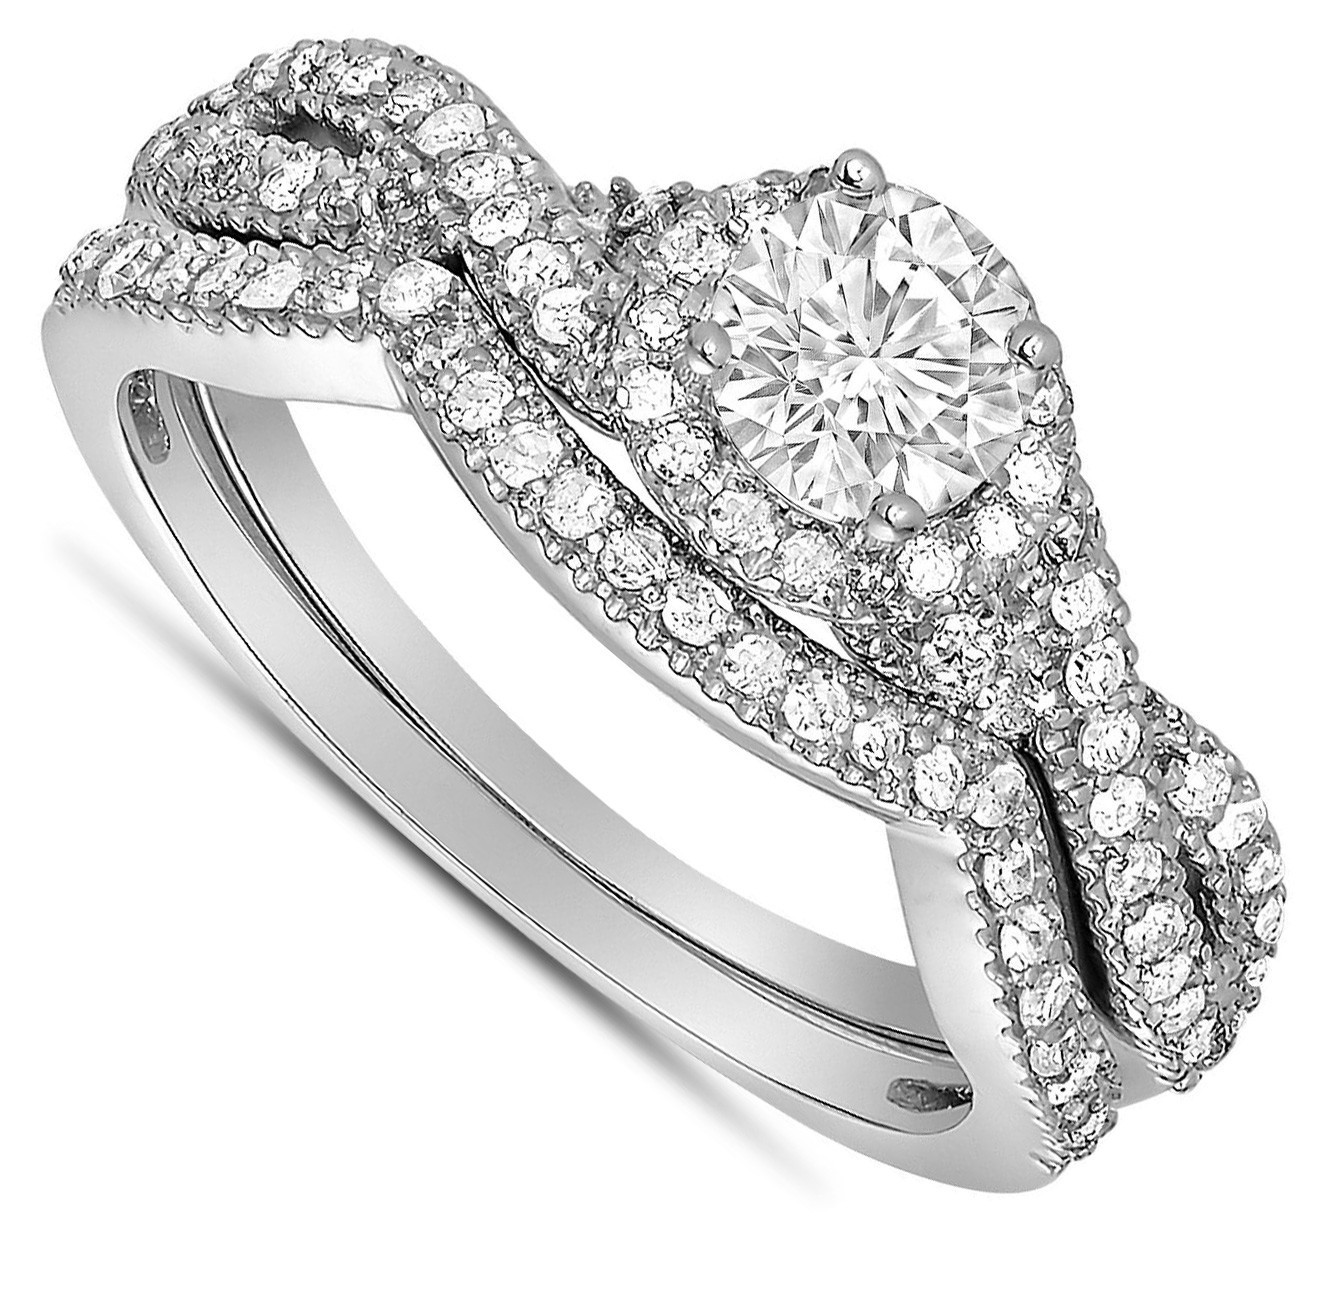 Infinity Wedding Ring Set
 2 Carat Round Diamond Infinity Wedding Ring Set in White